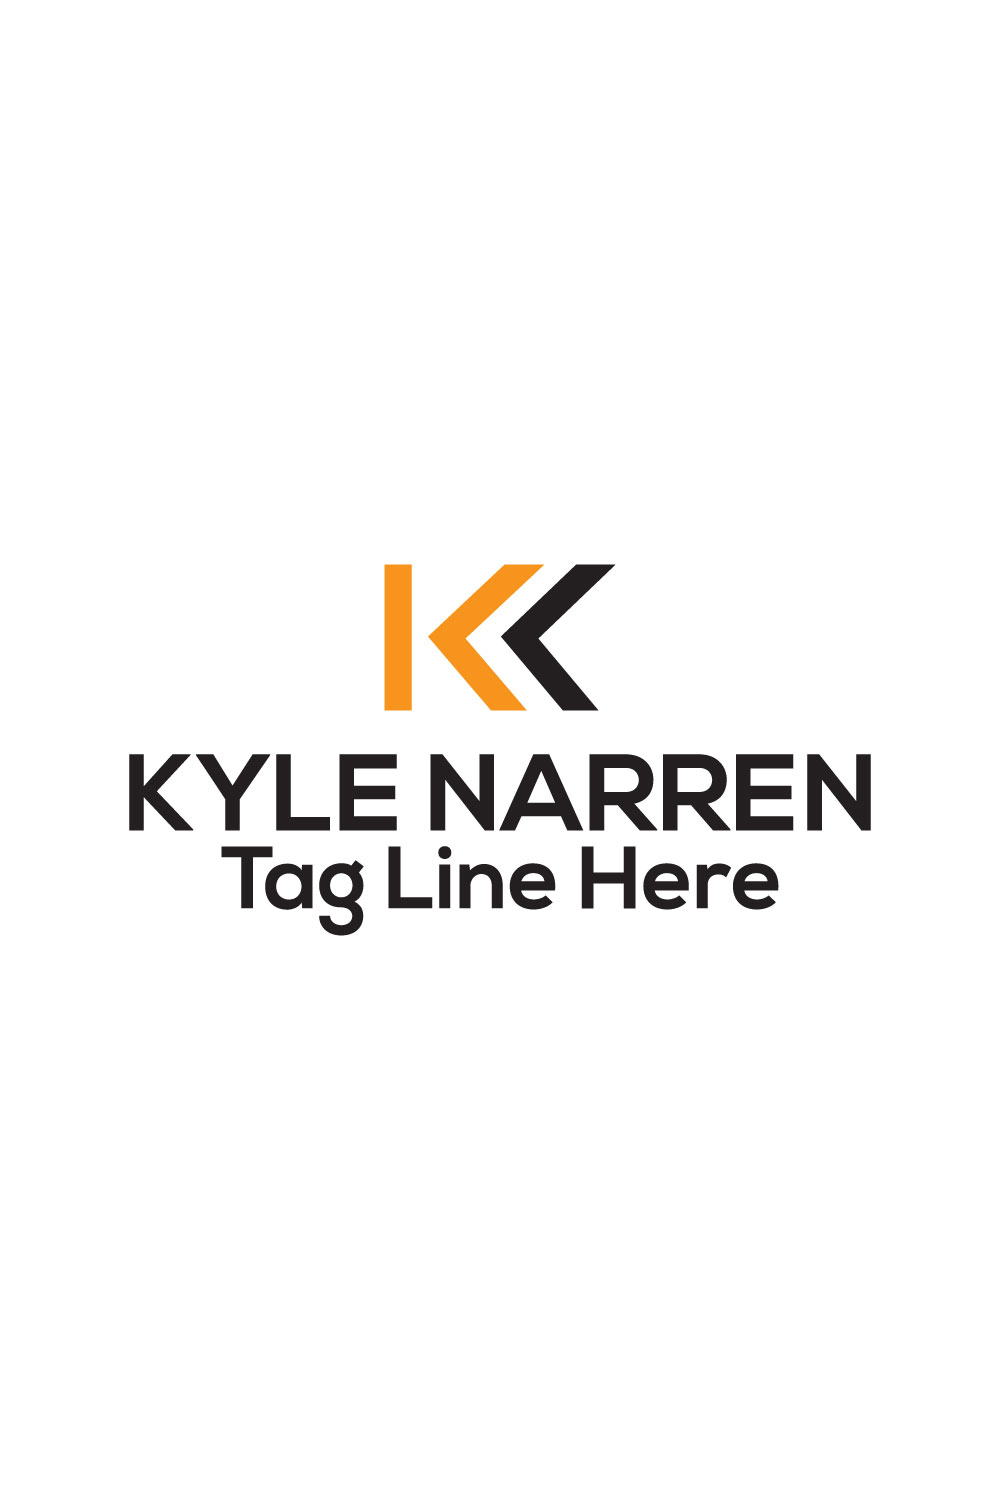 K Letter Logo Design Template previews.